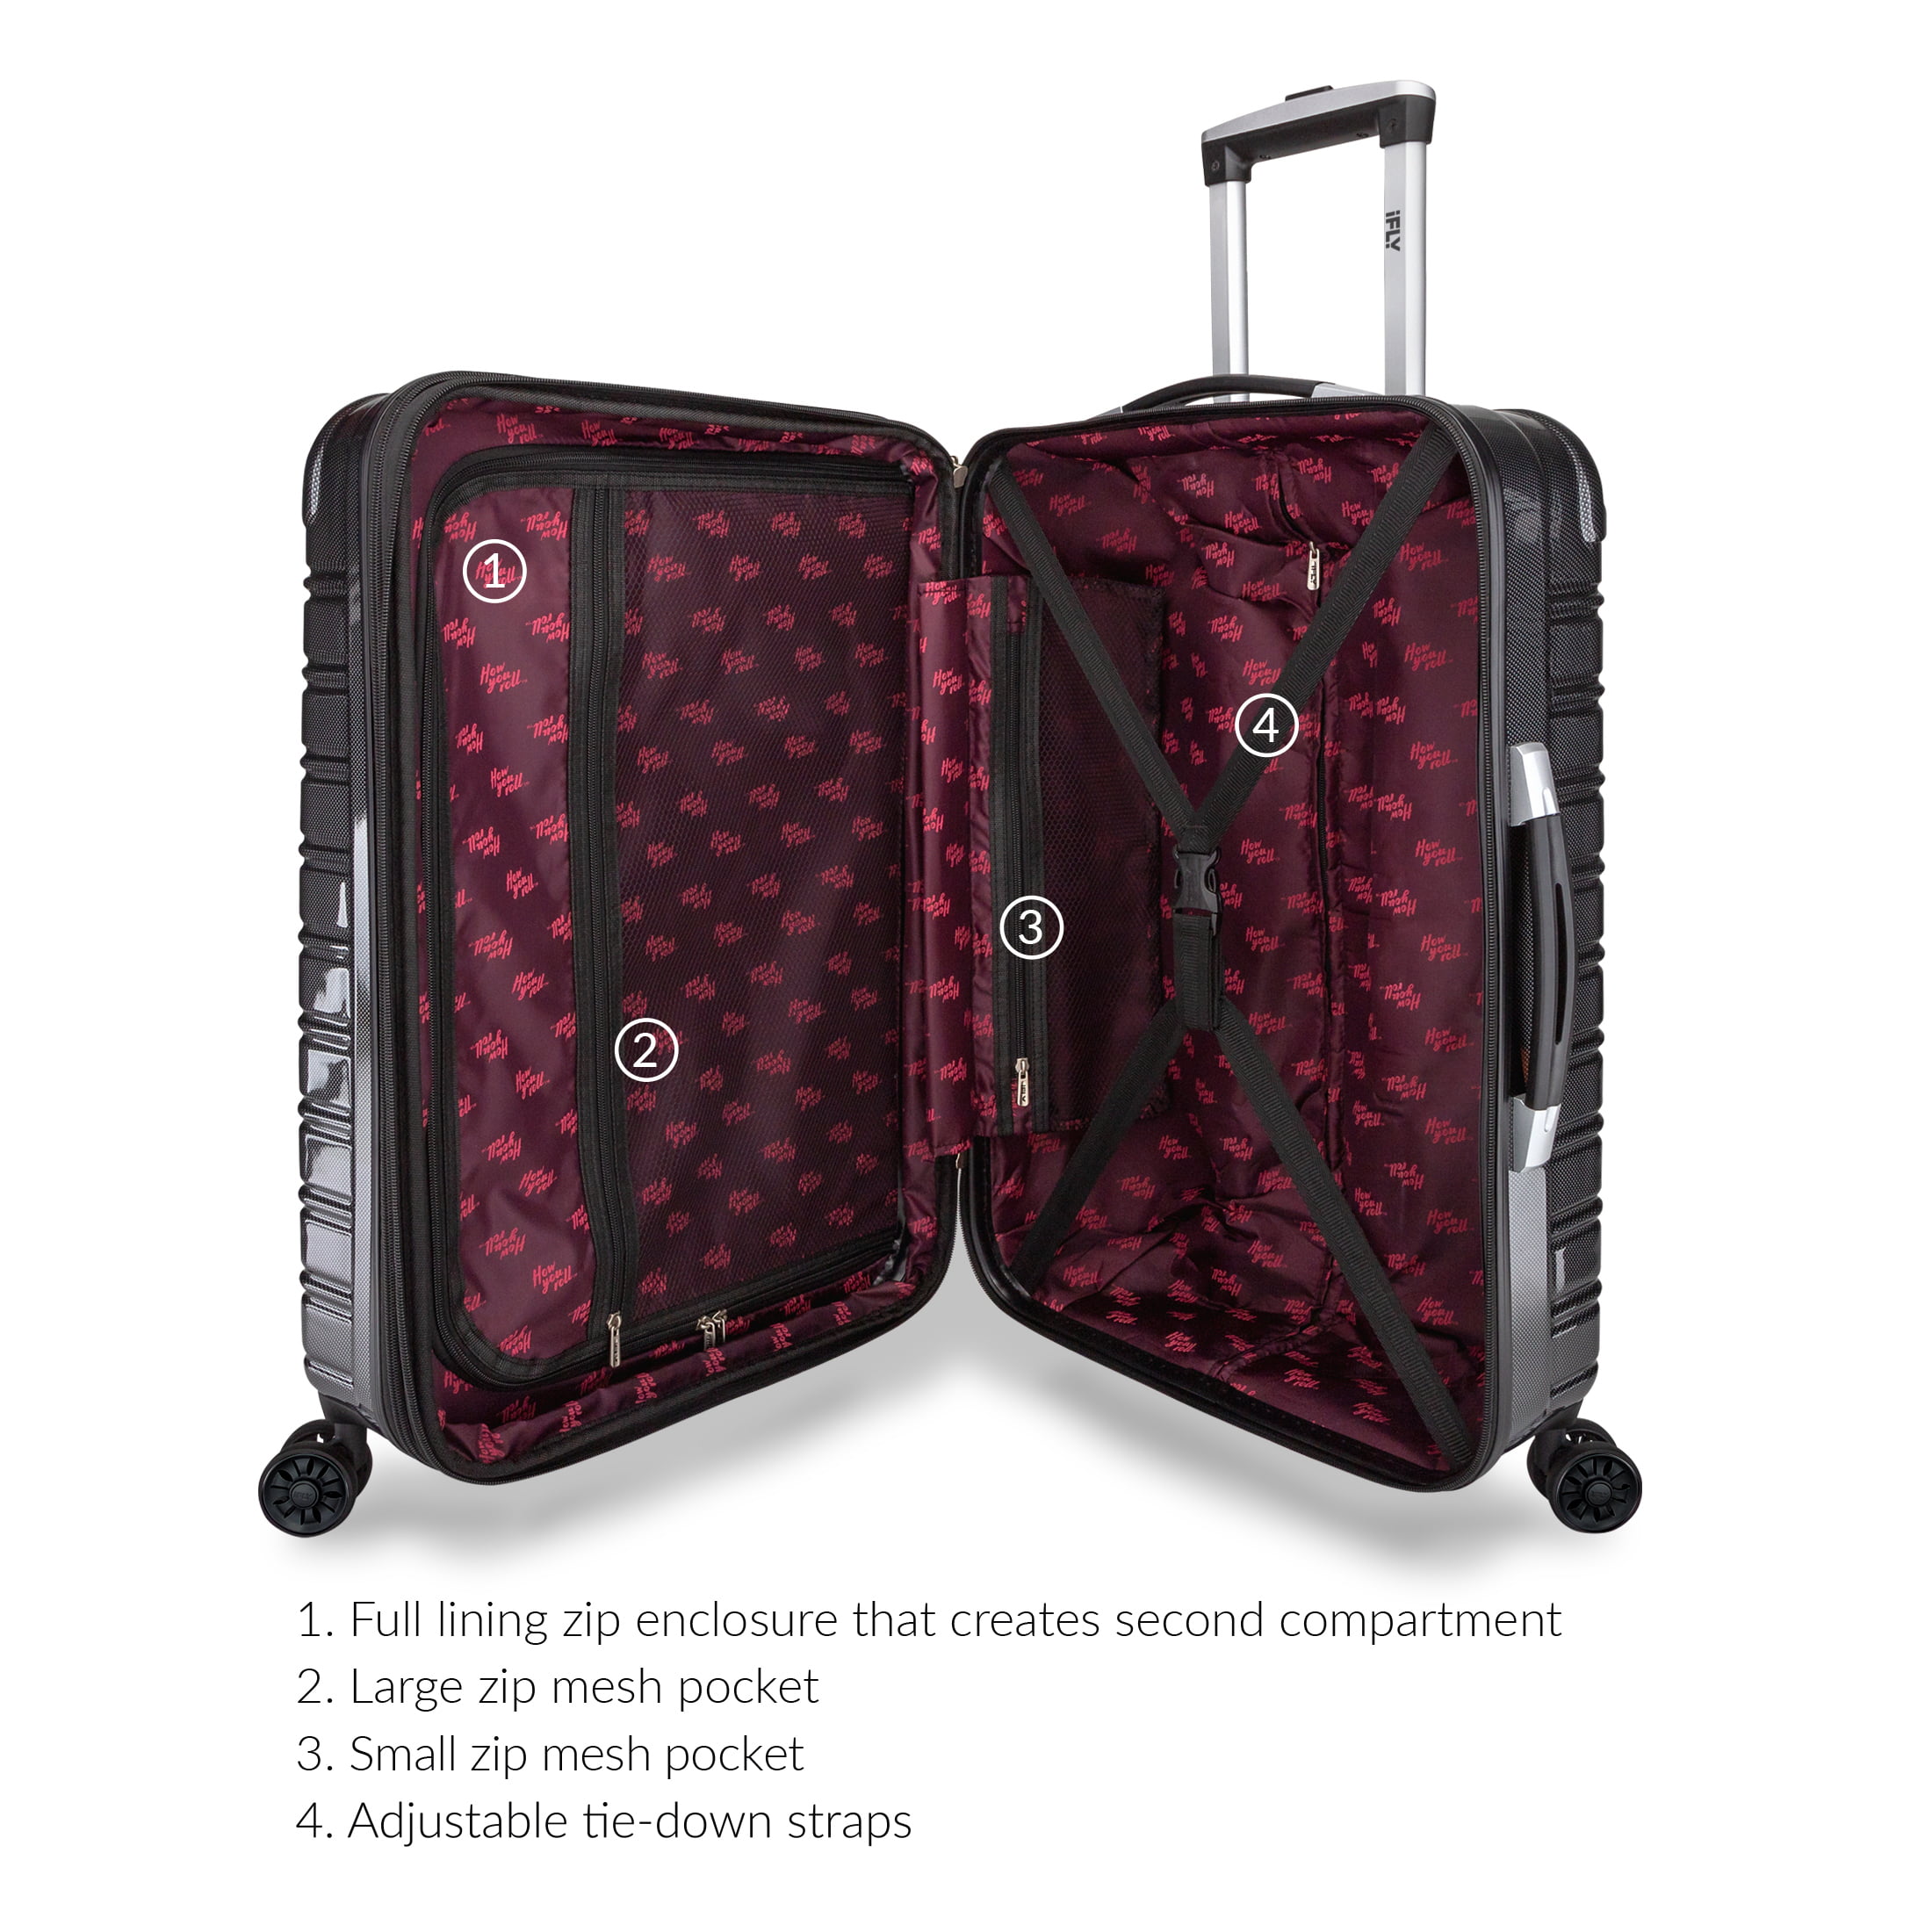 iFLY Hardside Luggage Fibertech 20 Inch Carry-on Luggage, Black